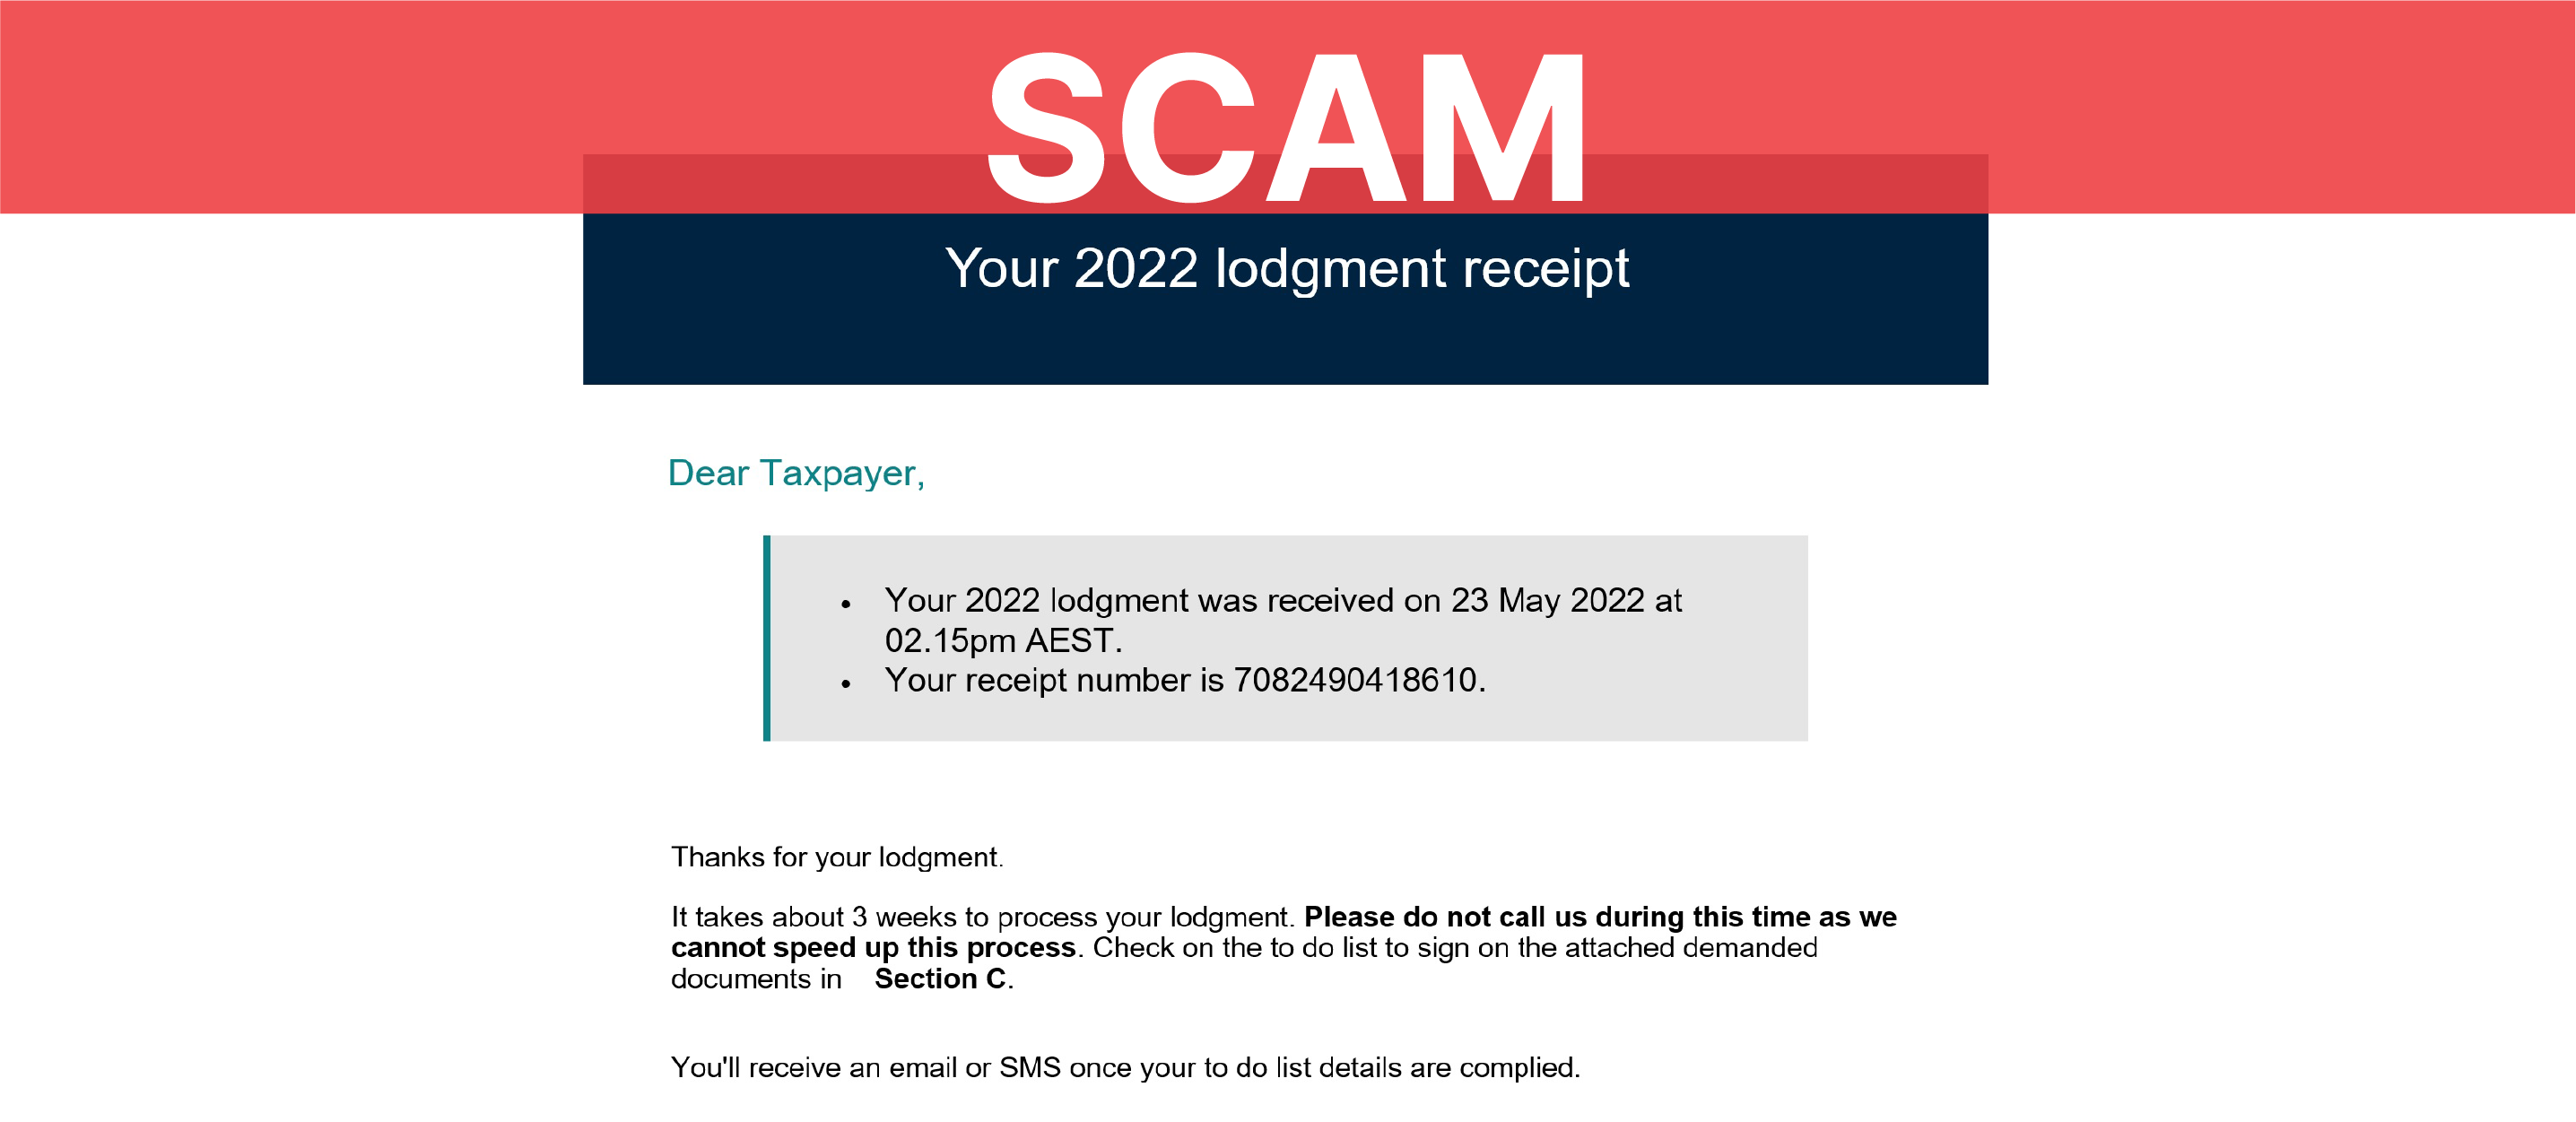 SCAM: Your 2022 lodgment receipt message